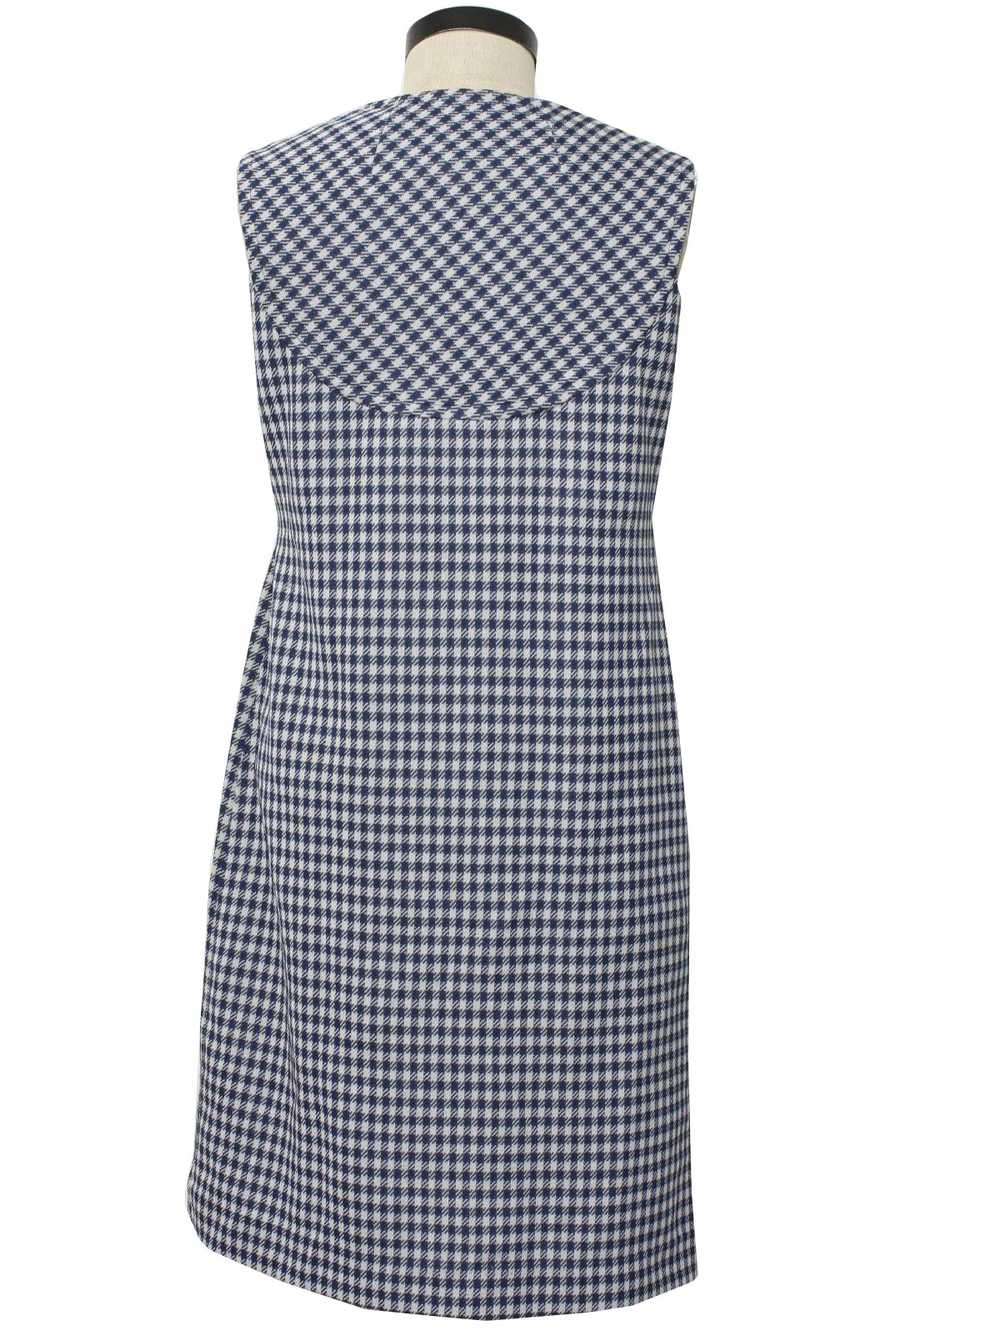 1970's Laiglon Knit Dress - image 3